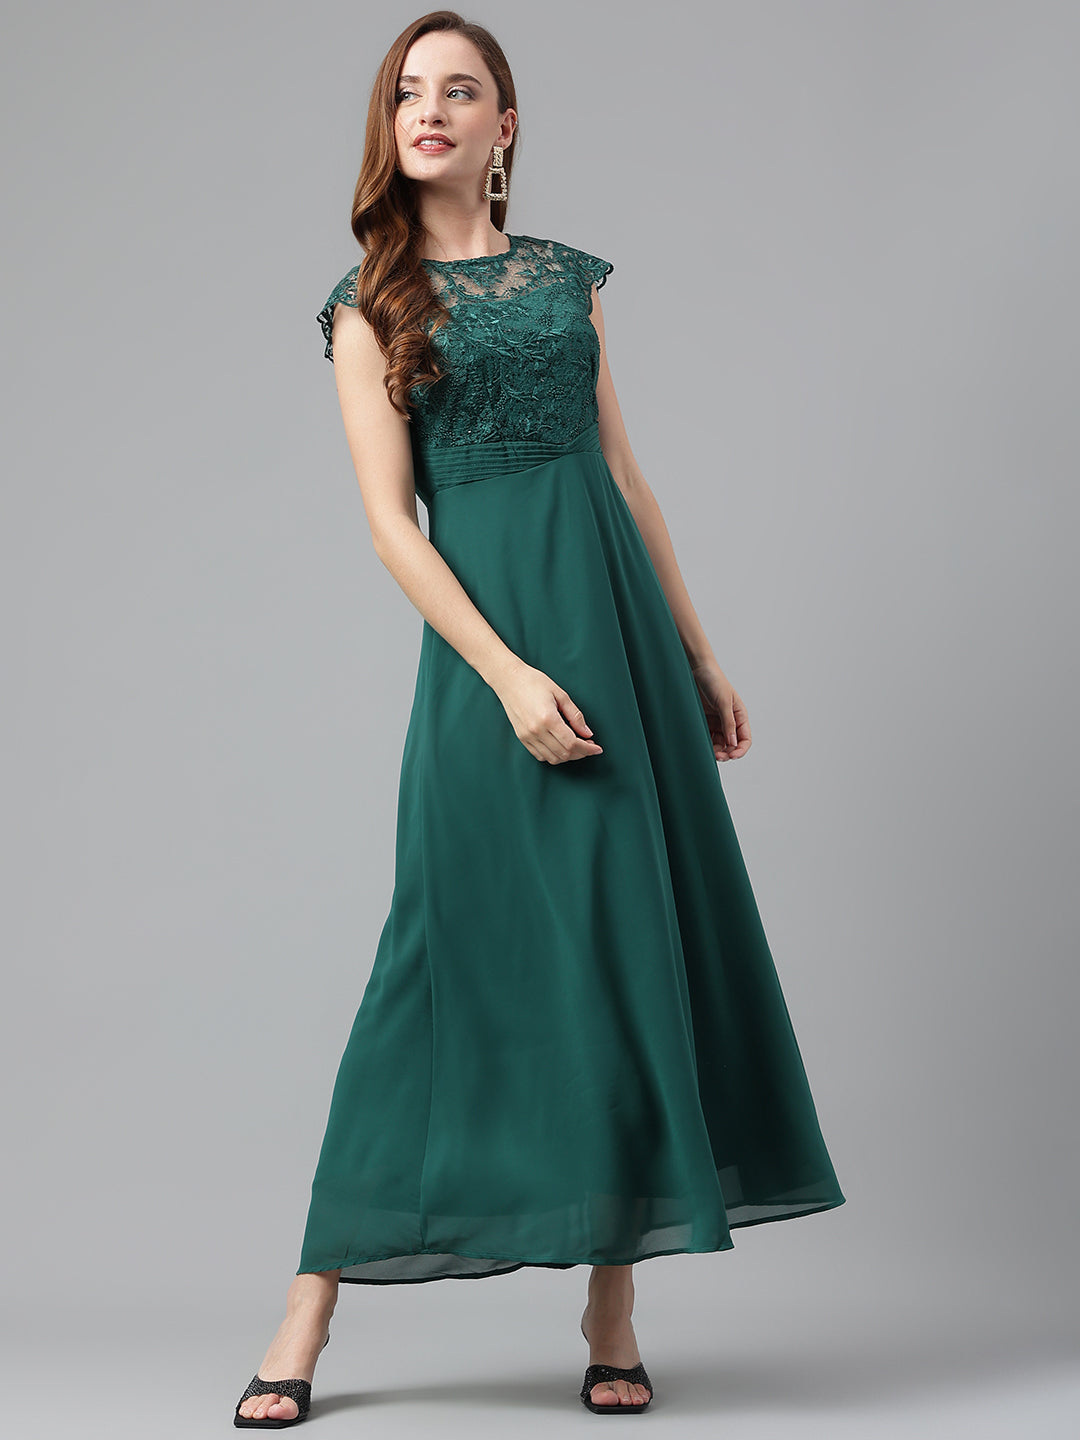 Greenbottle Cap Sleeve Solid Sequin Dress